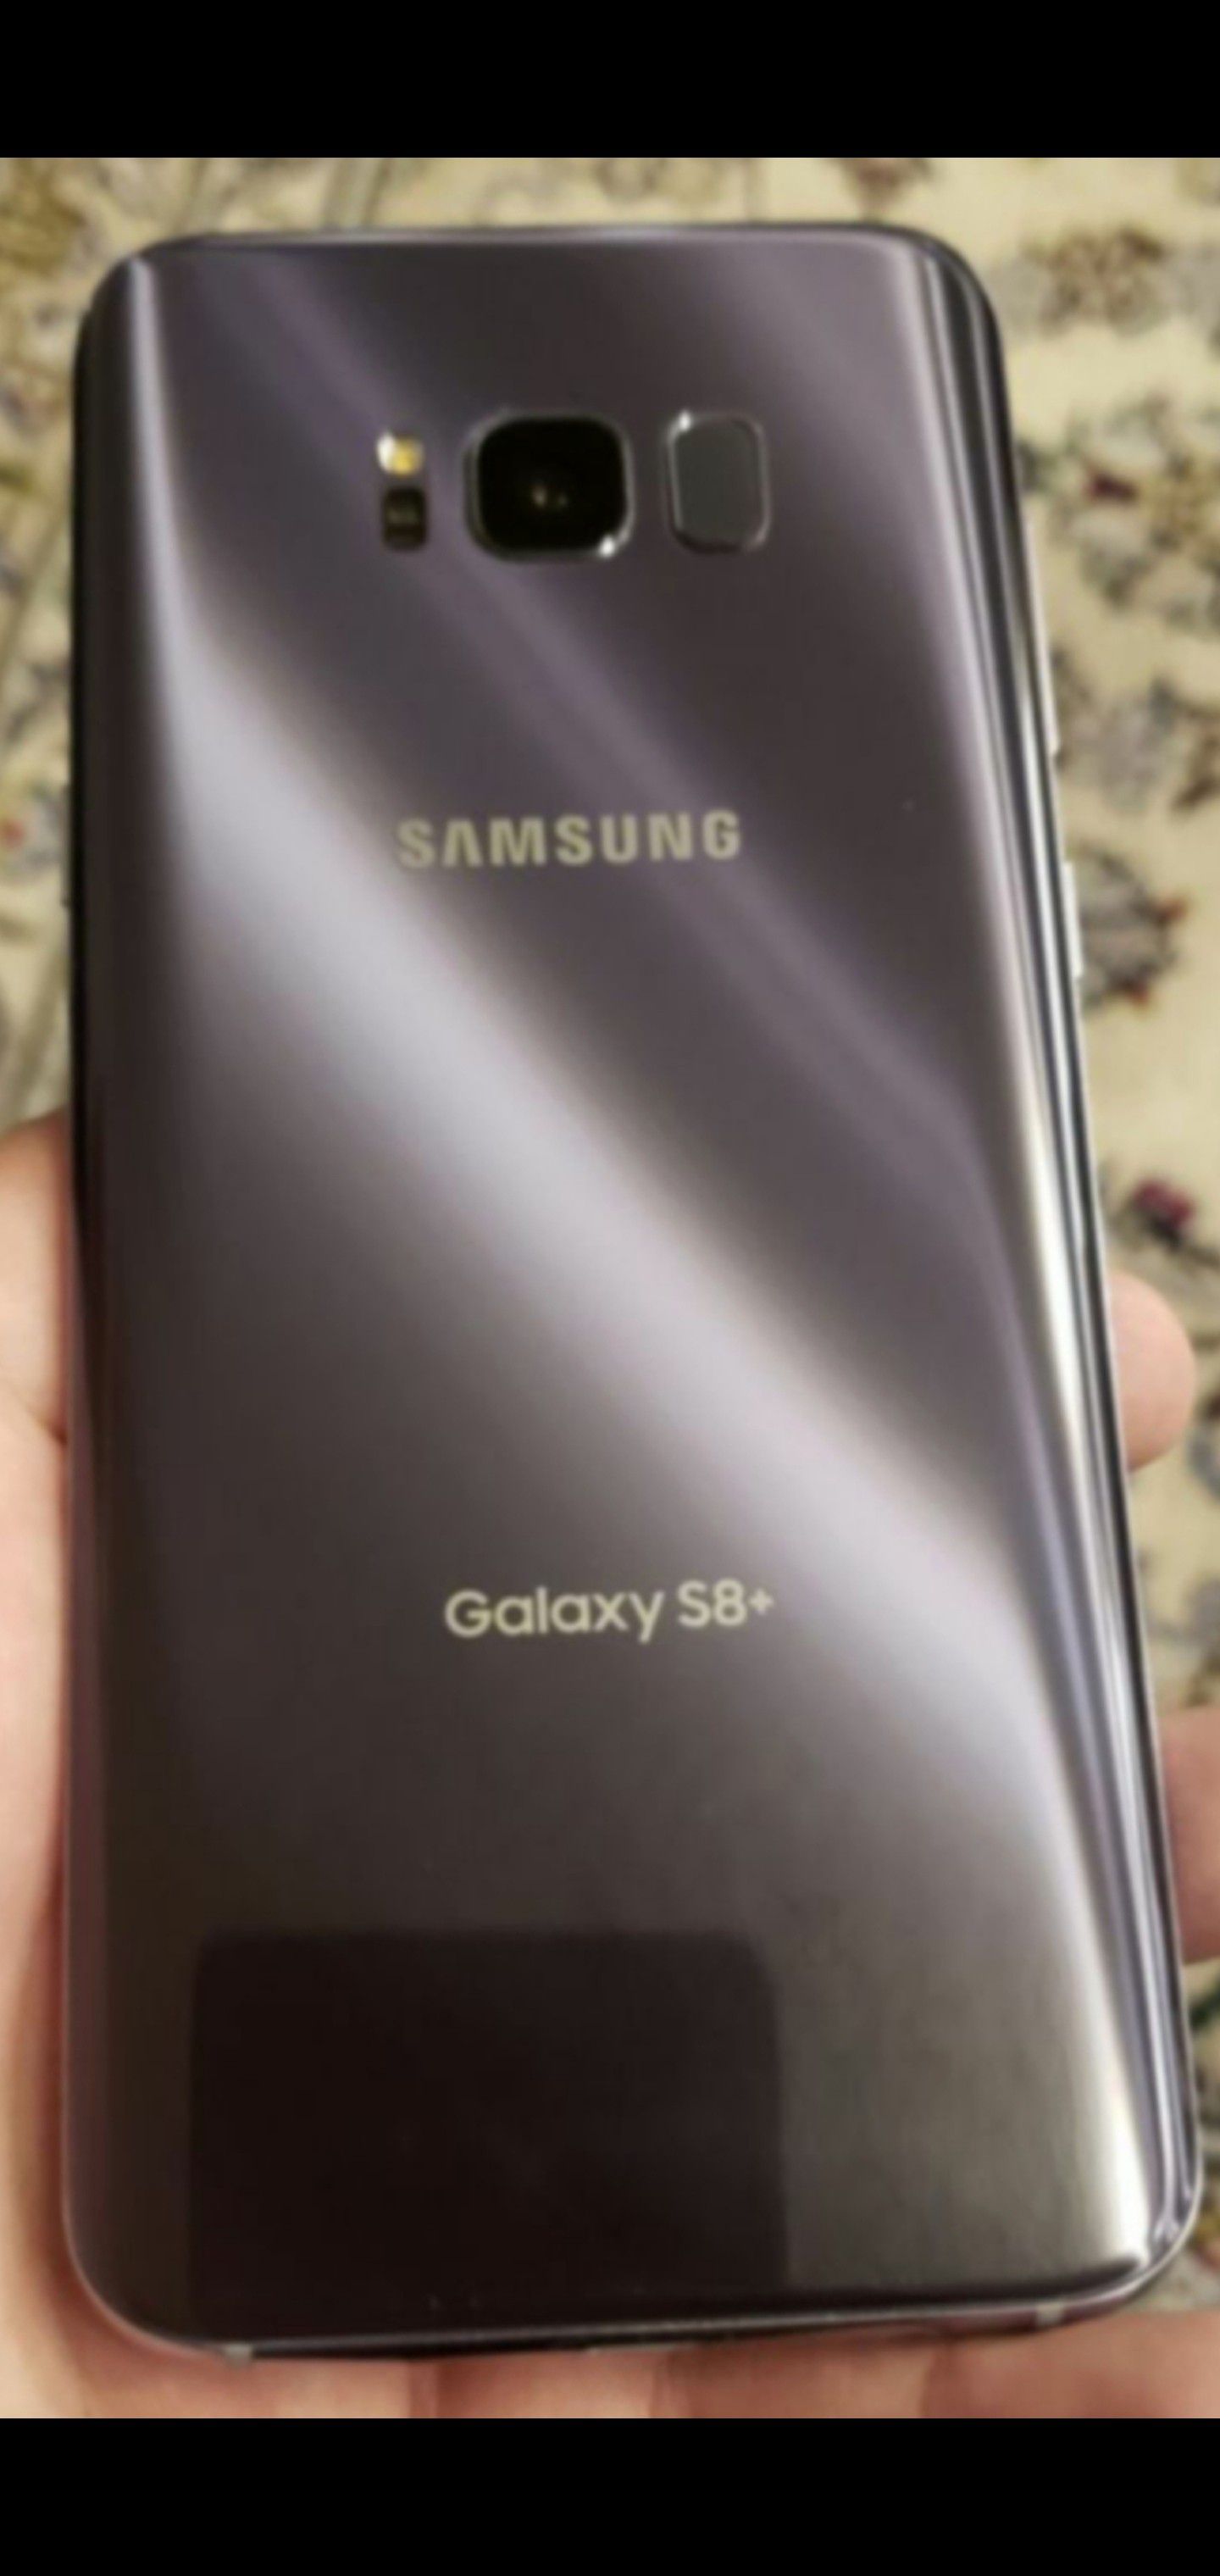 New Galaxy S8 Plus Samsung Unlocked Liberado DESBLOQUEADO T-Mobile Metro Att Cricket